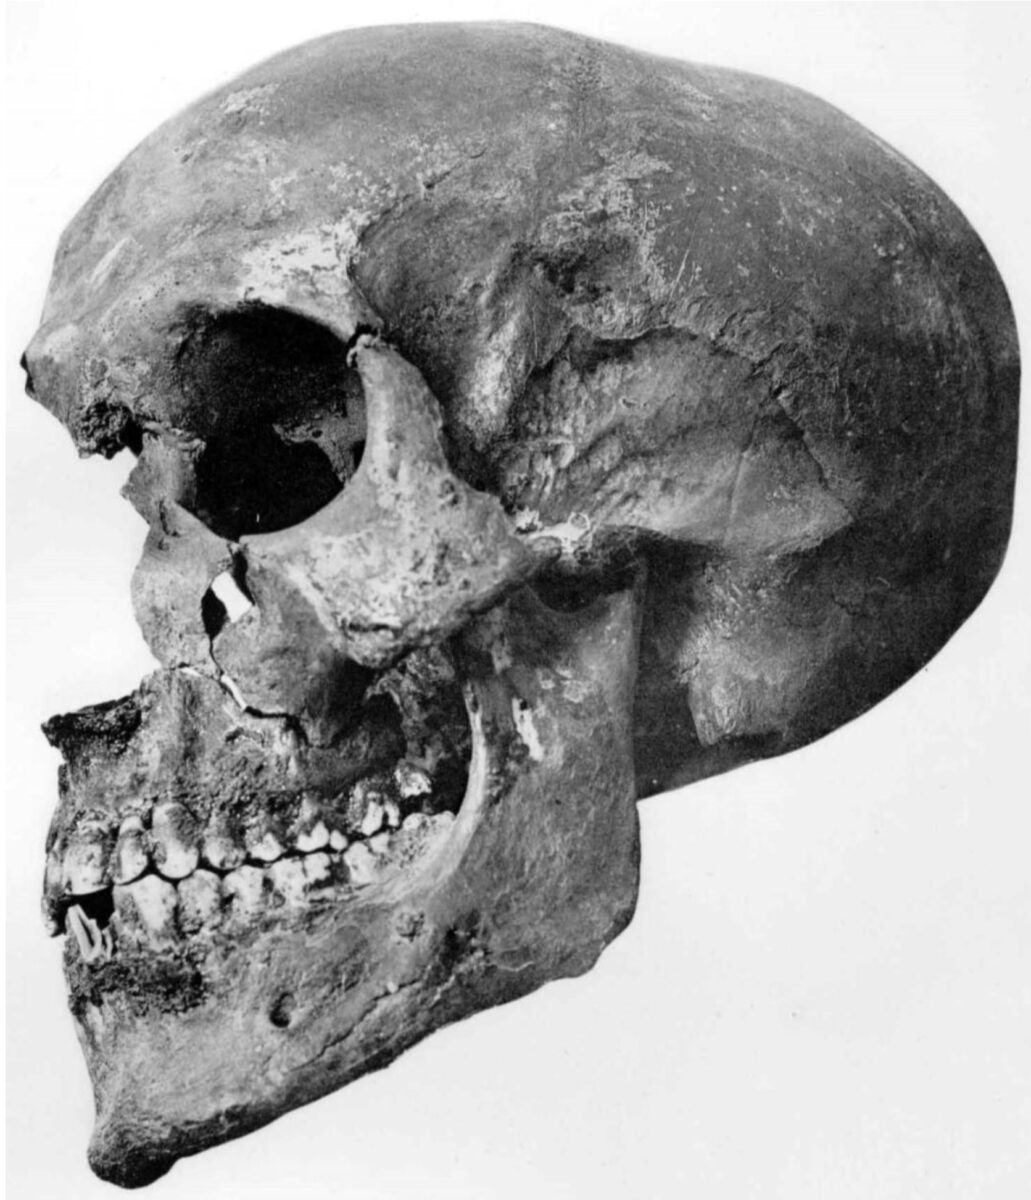 The skull of KV 55, photograph by G. E. Smith 1912.